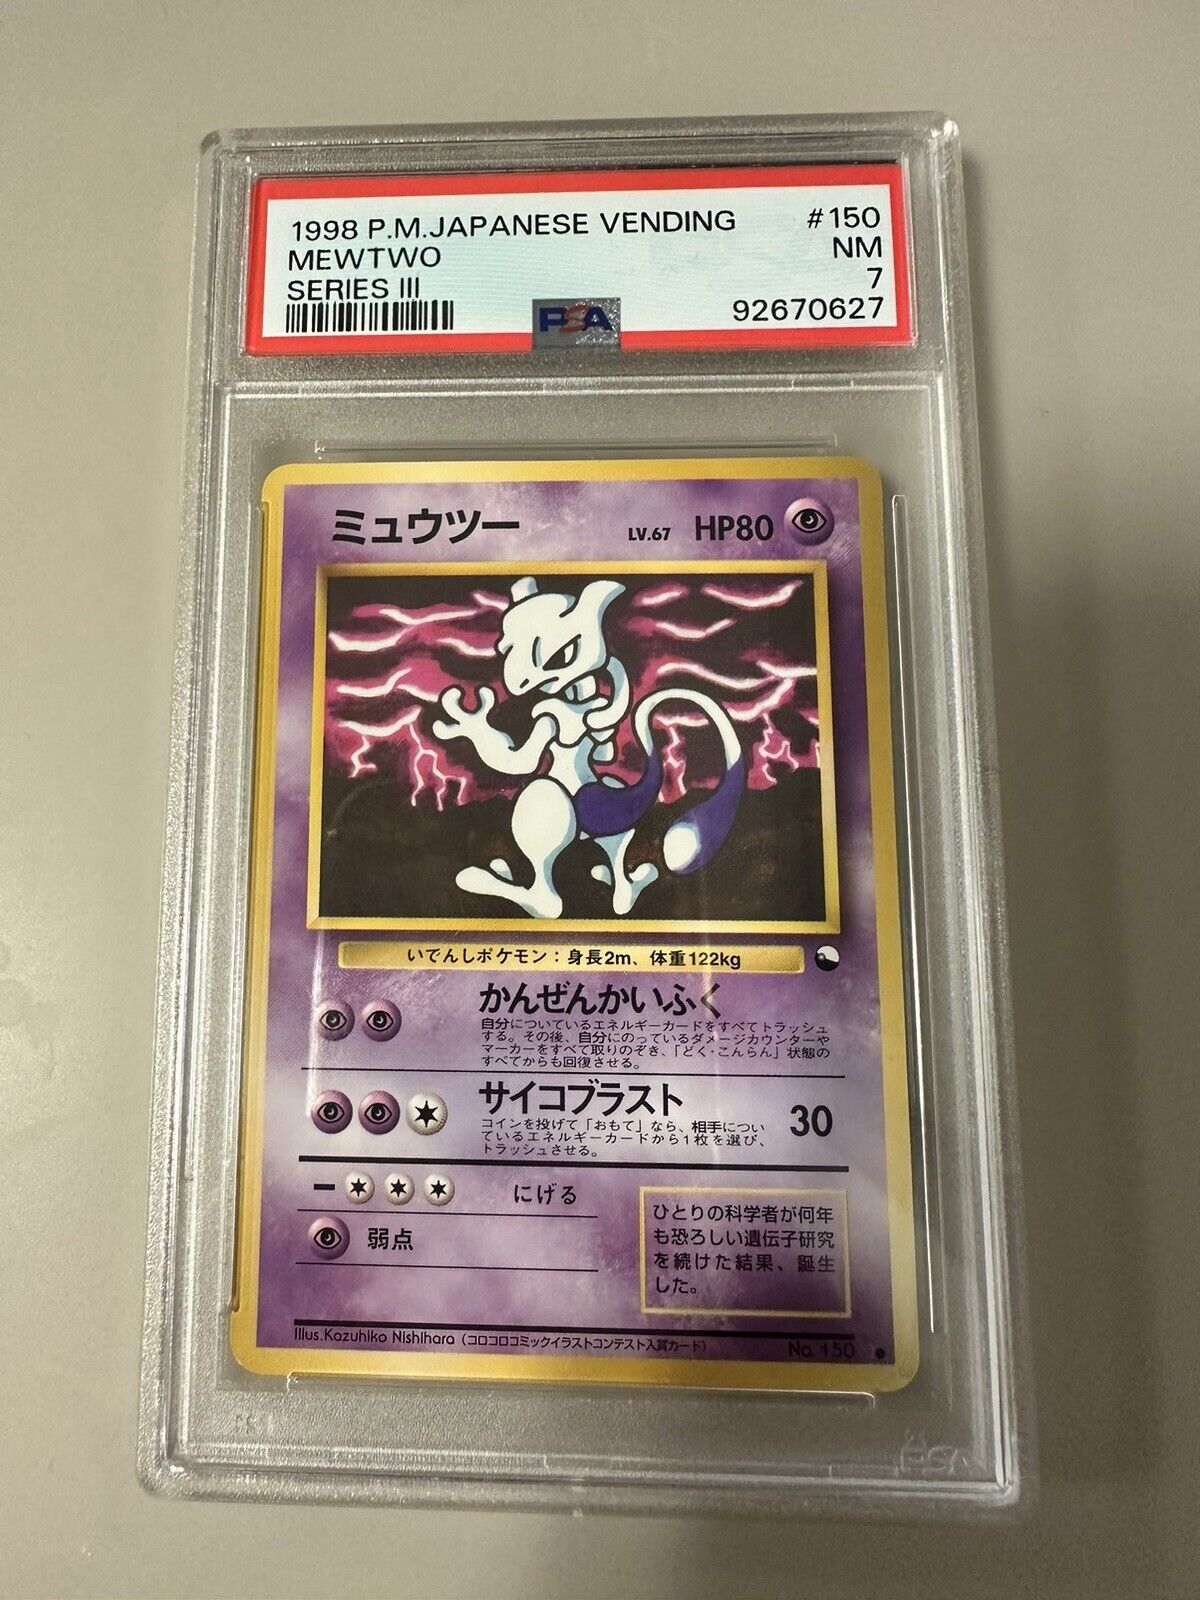 Mewtwo PSA 7 Vending Series 3 1998 #150 Pokemon Japanese Pokemon Card